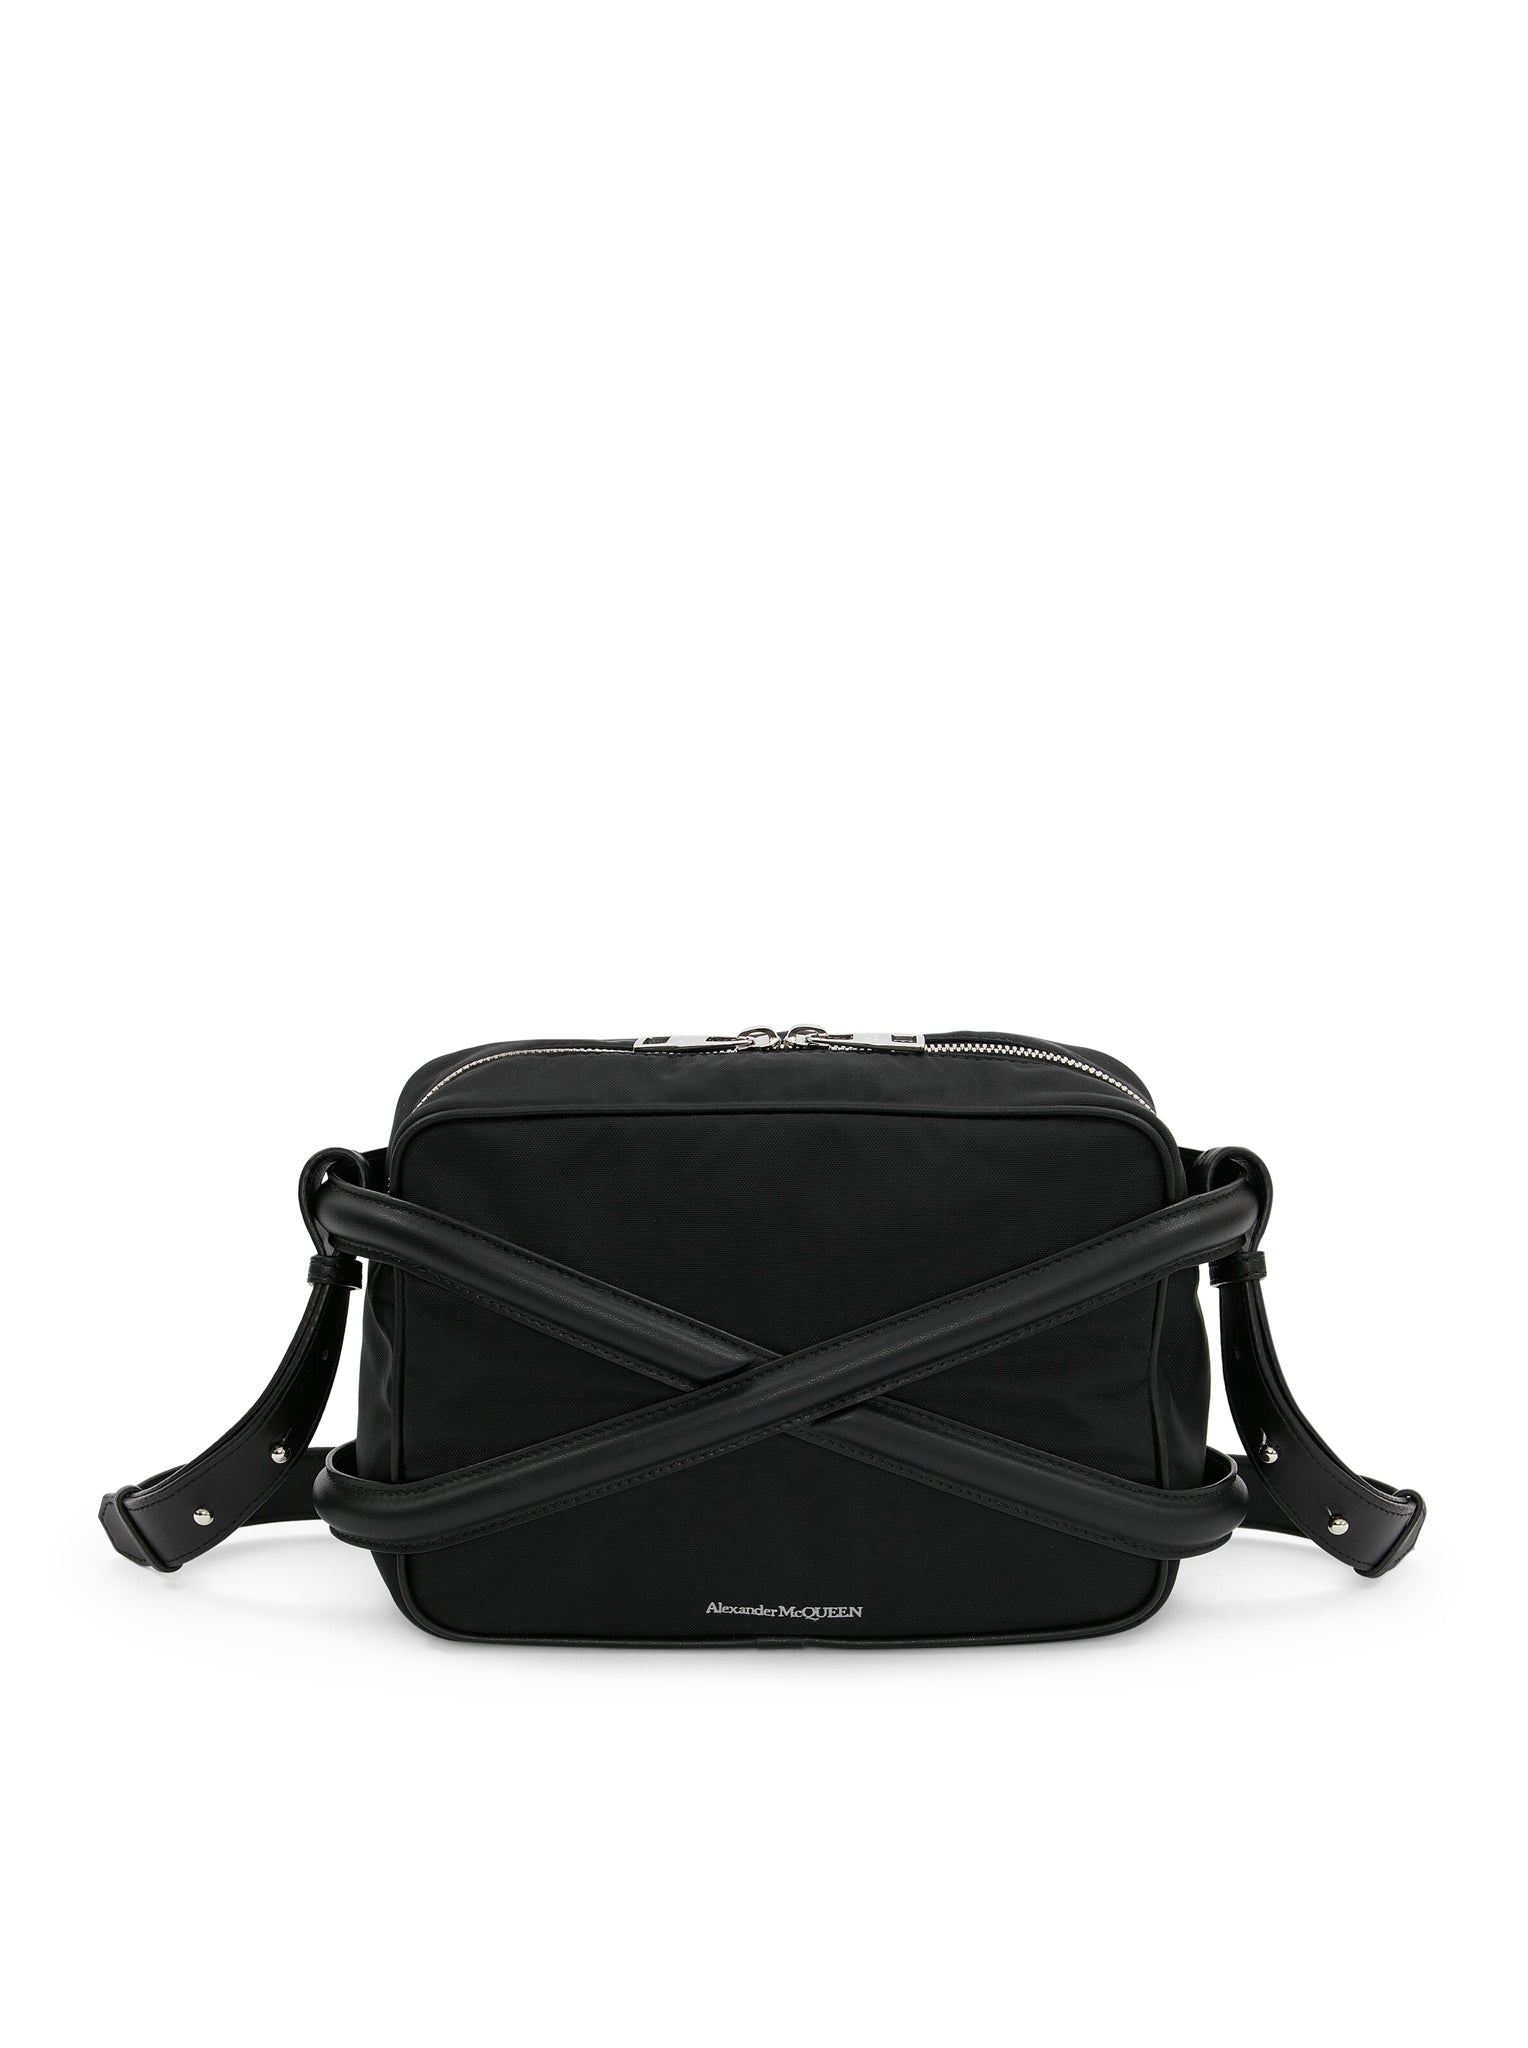 The Harness Camera Bag in Black